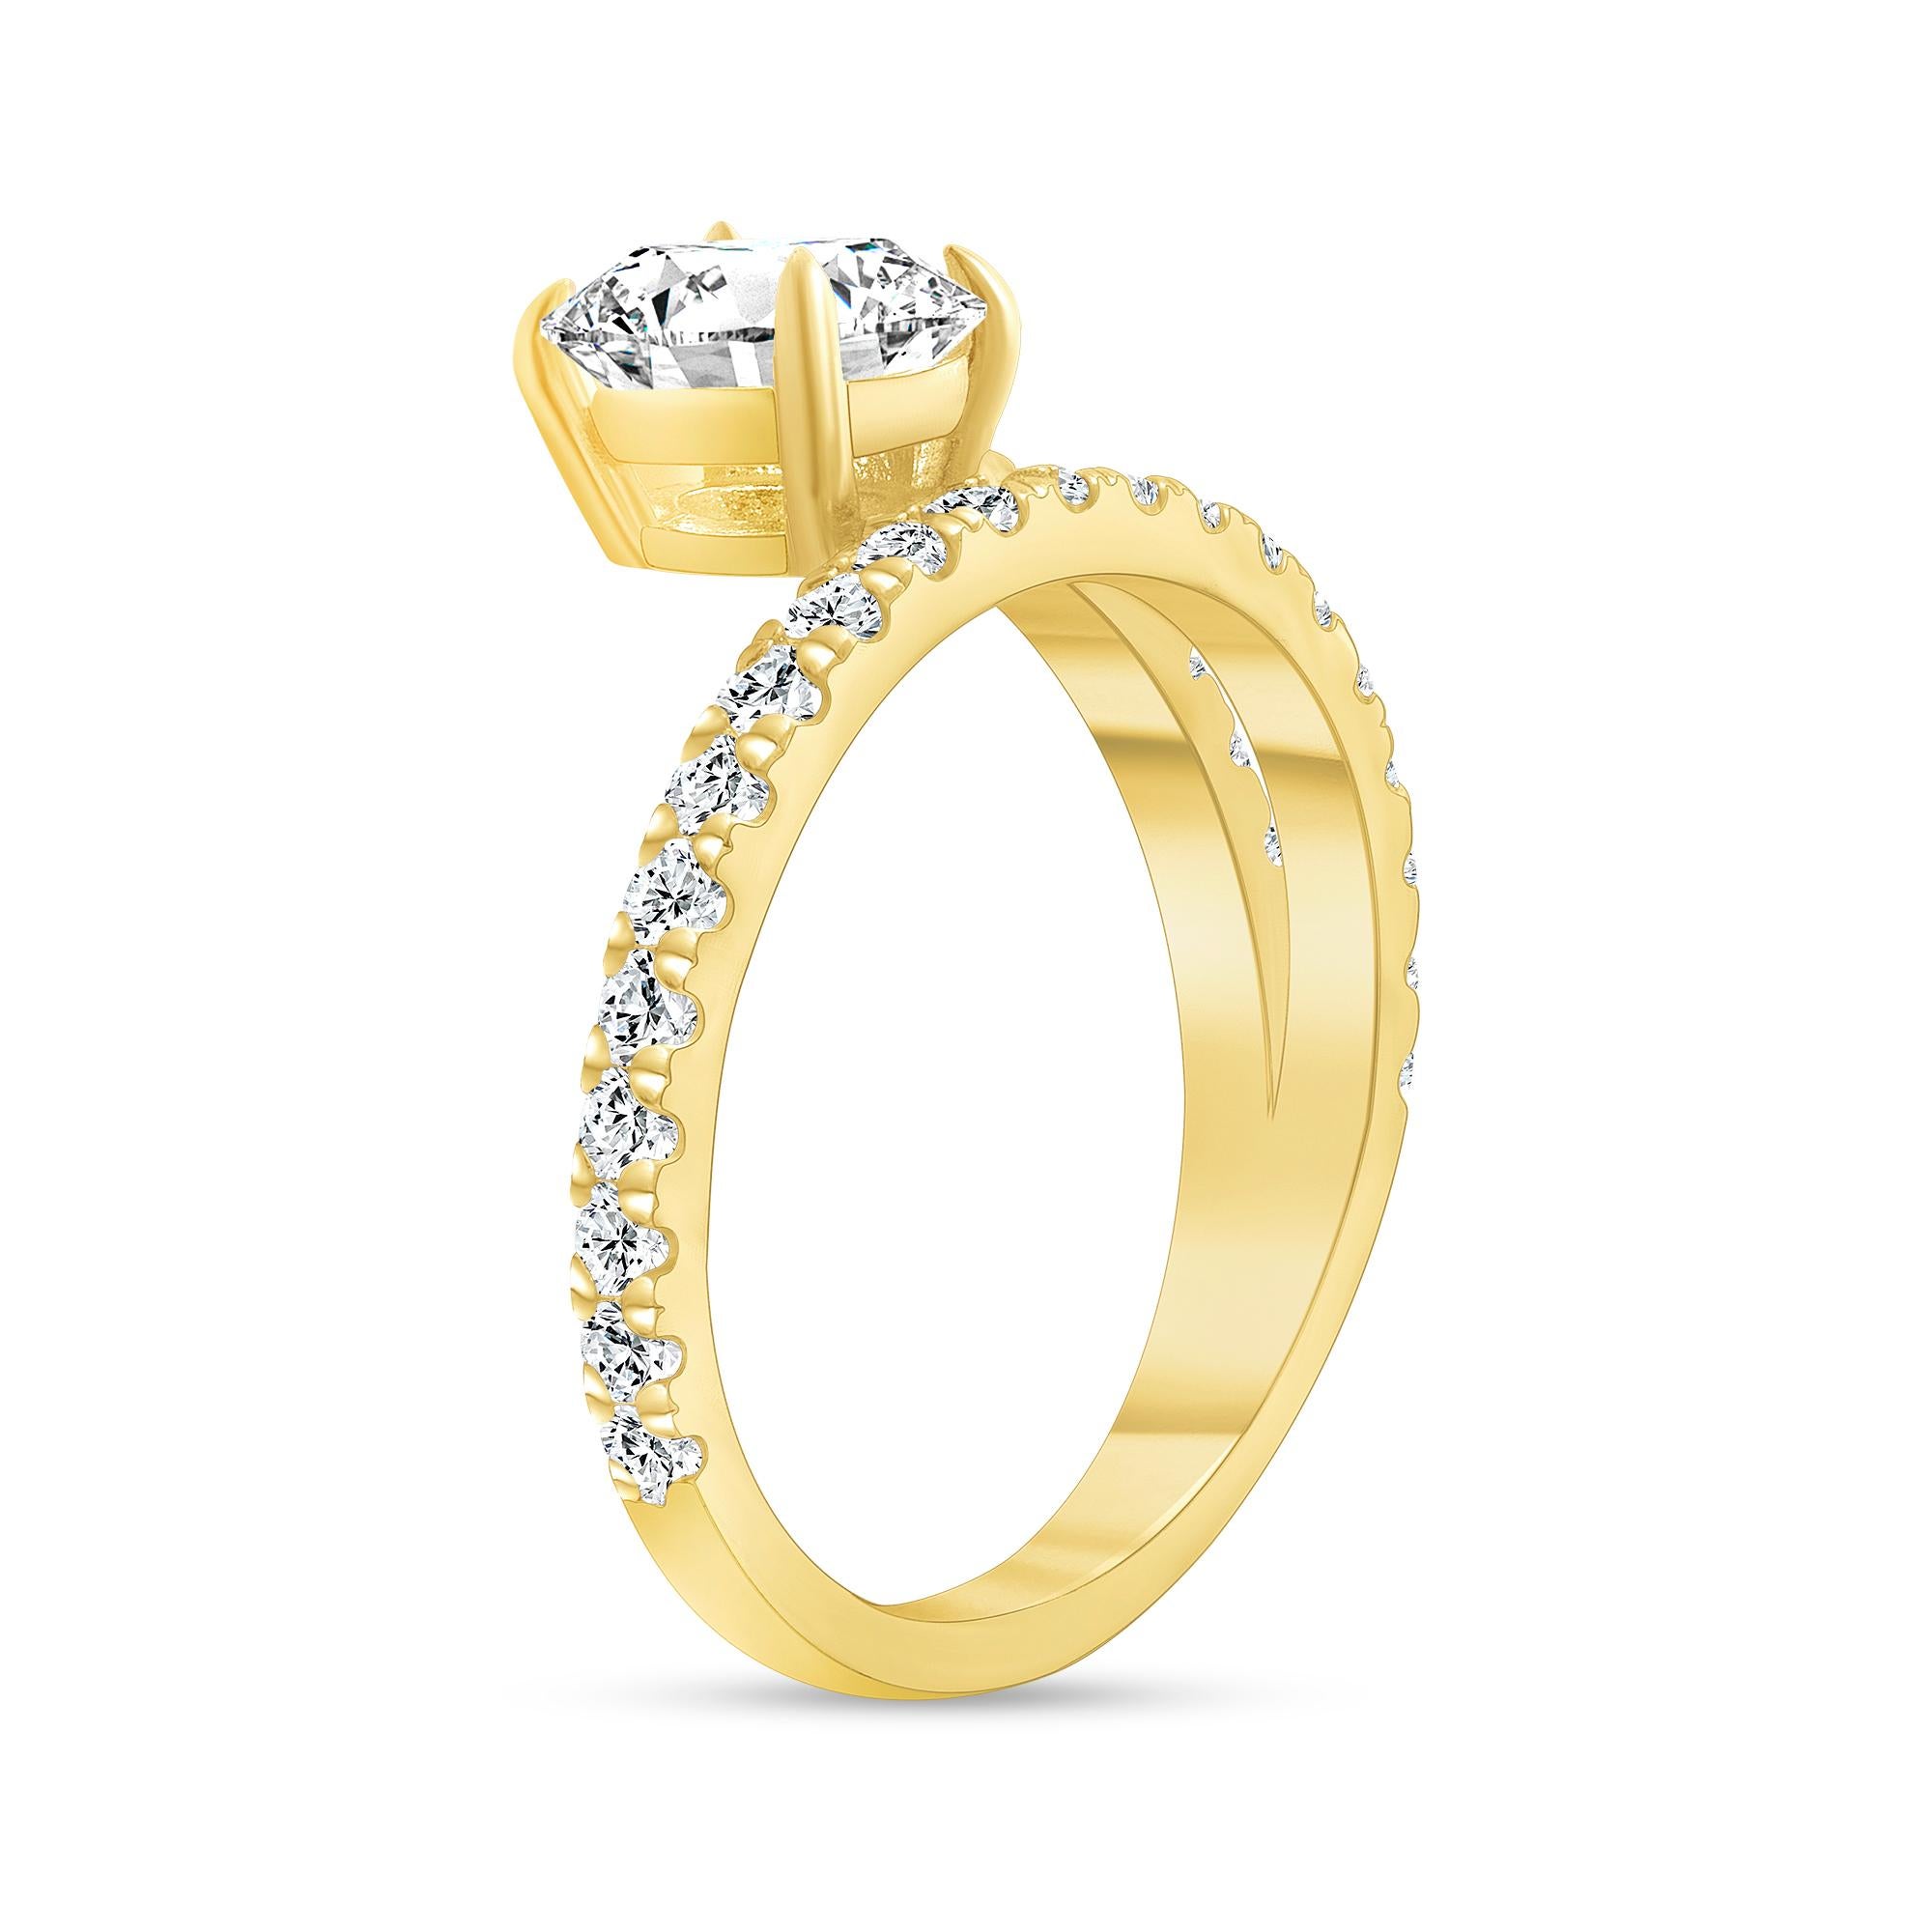 For Sale:  0.75 Carat Oval Cut Diamond Engagement Ring Design, '0.50 Carat Center Diamond' 4